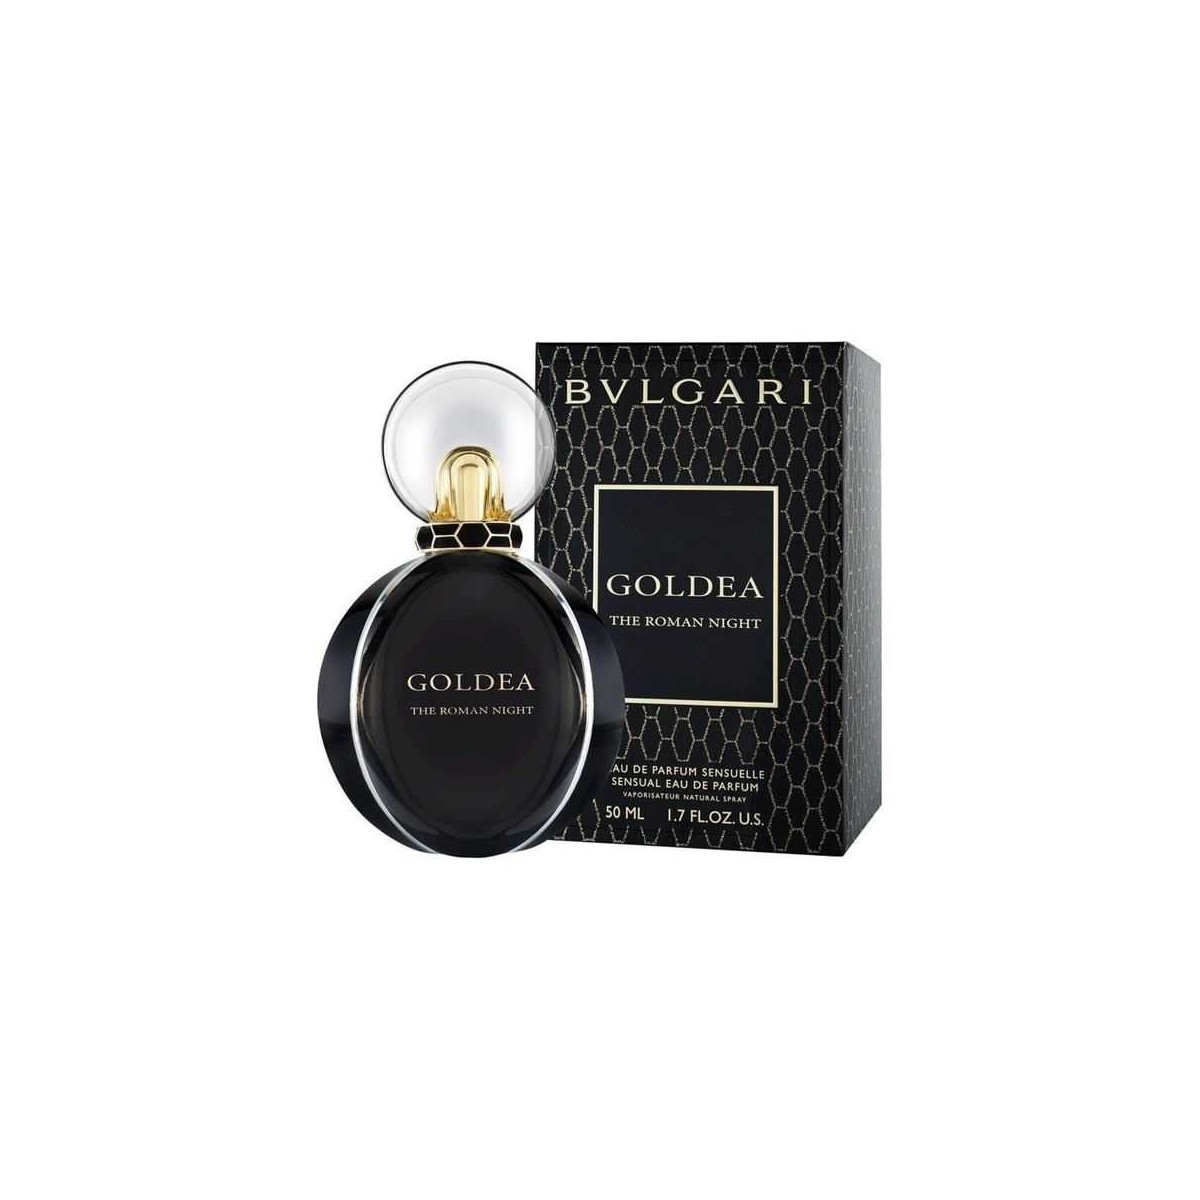 Bvlgari Goldea The Roman Night Eau de Parfum 50ml spray